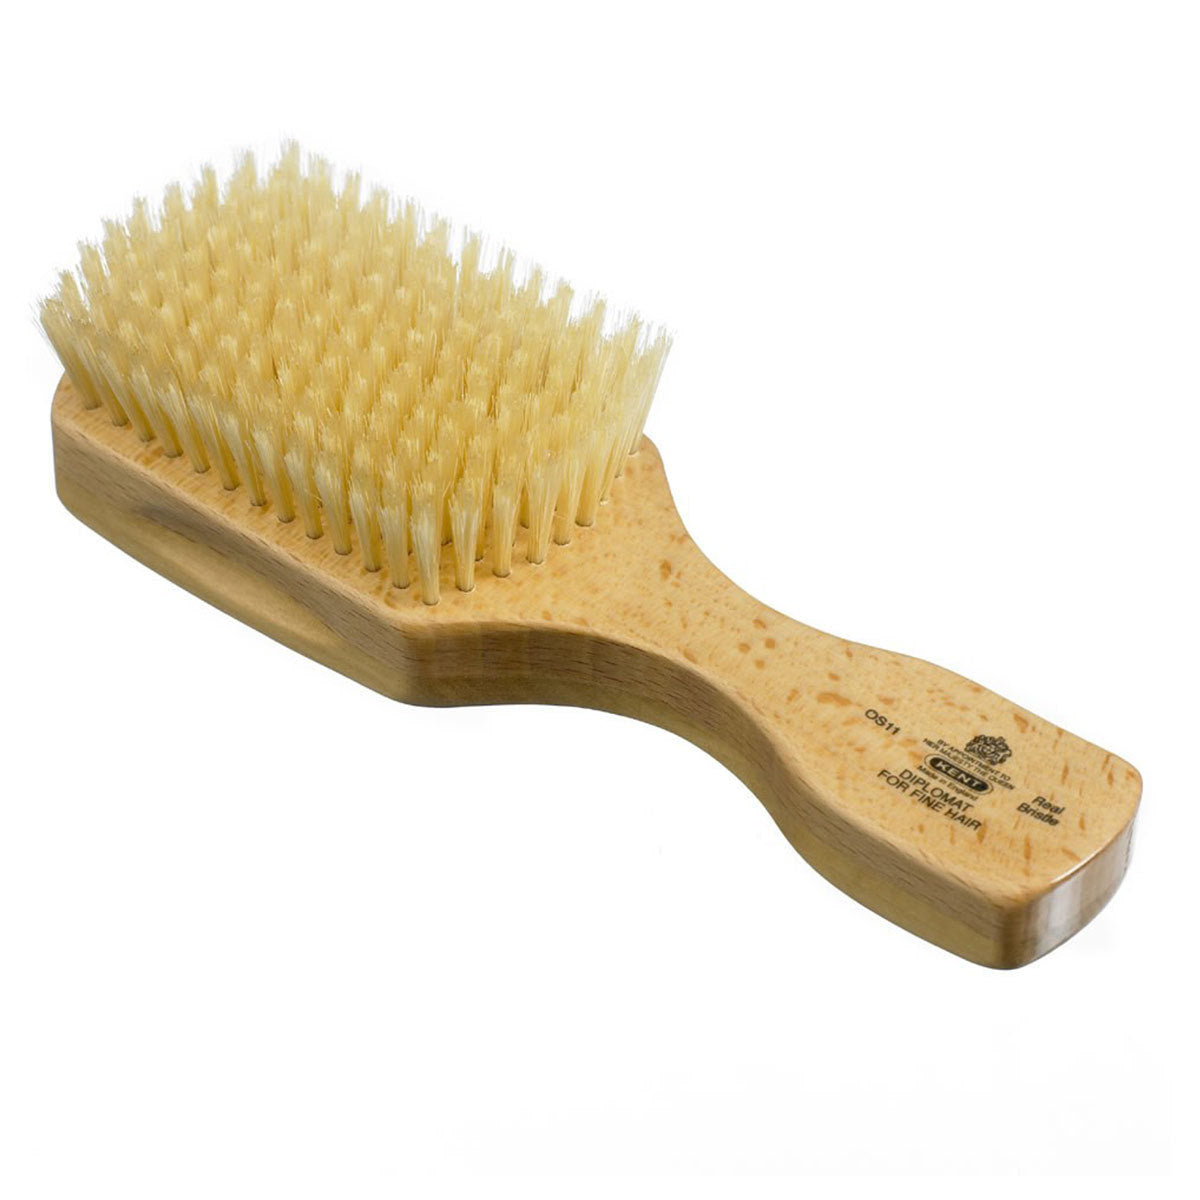 Primary image of Men's Rectangular Club Handle Soft White Bristle Hairbrush - OS11